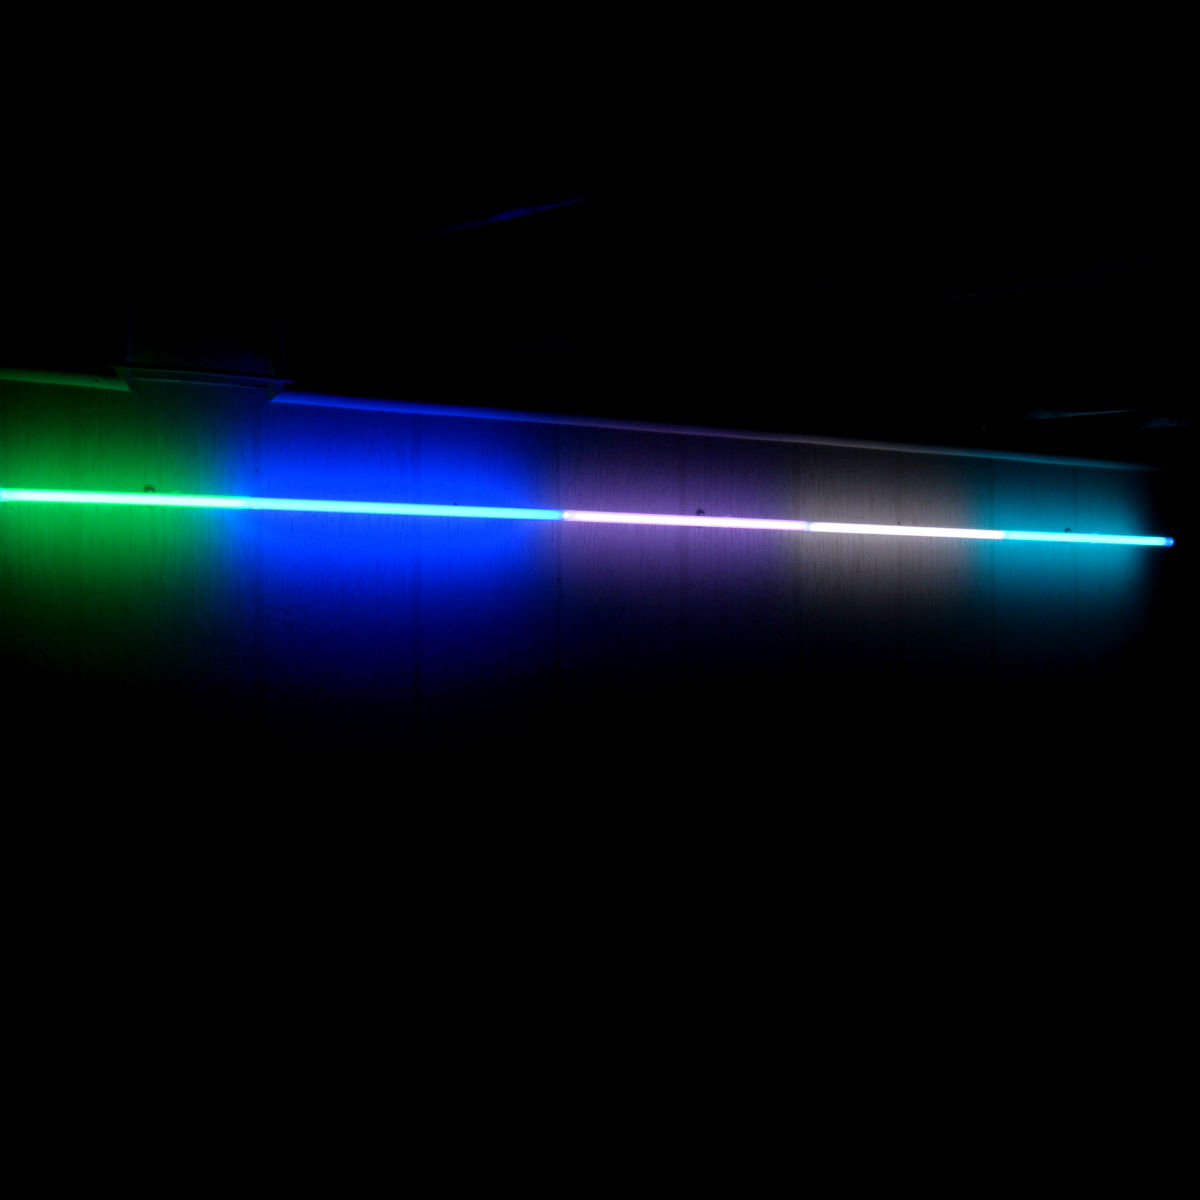 resized multi-colored neon waterfall lighting.jpg